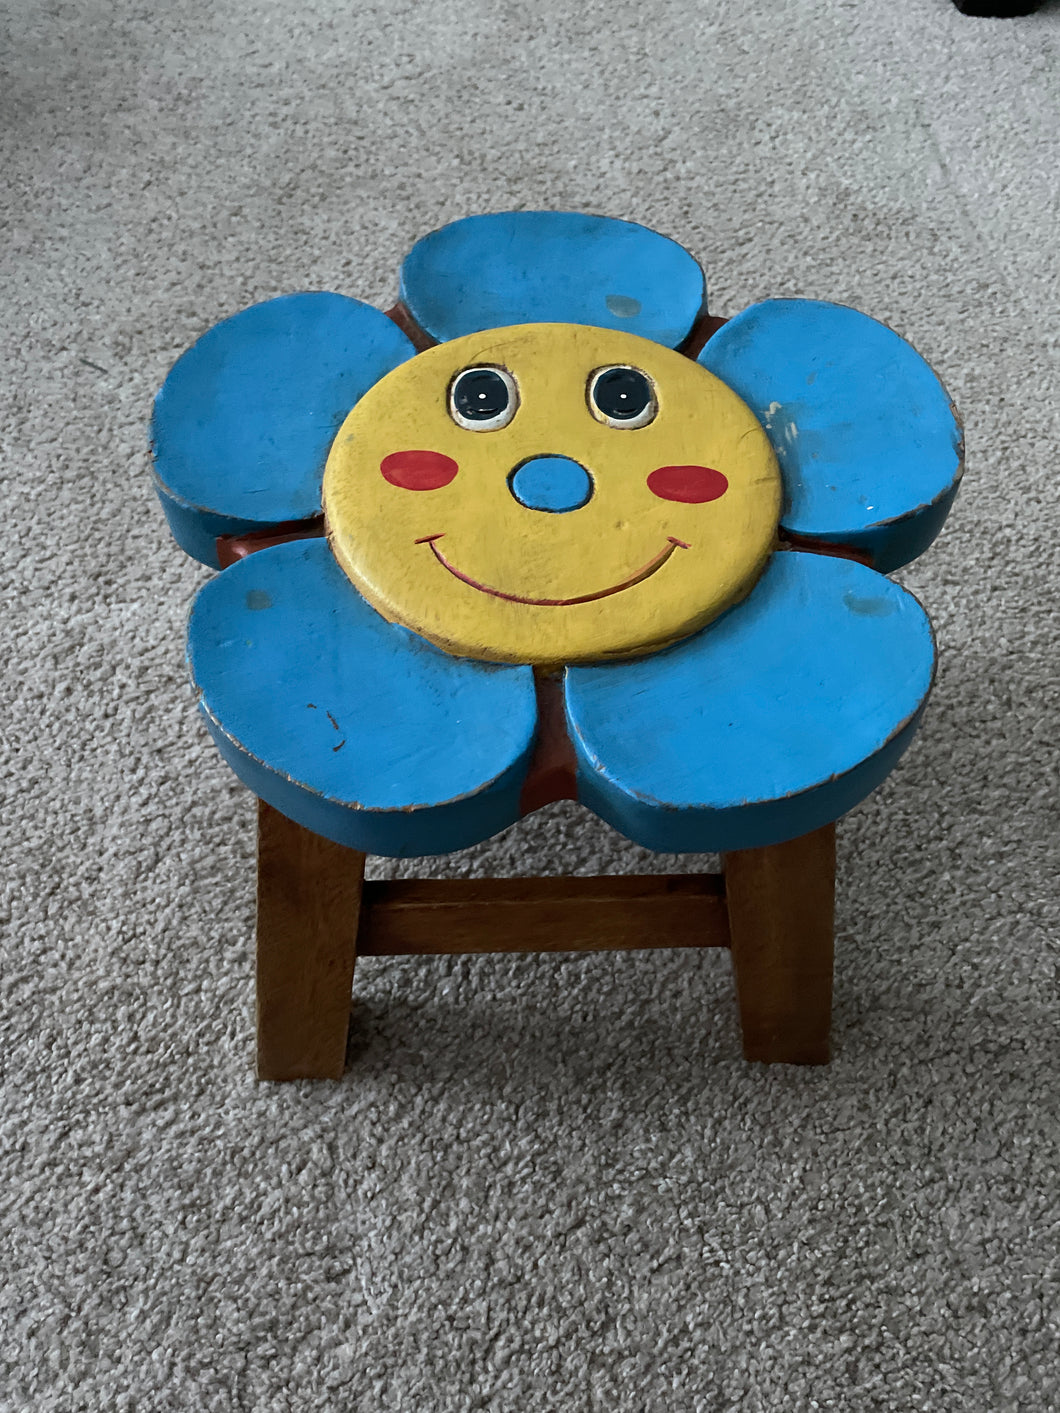 Flower wooden step stool